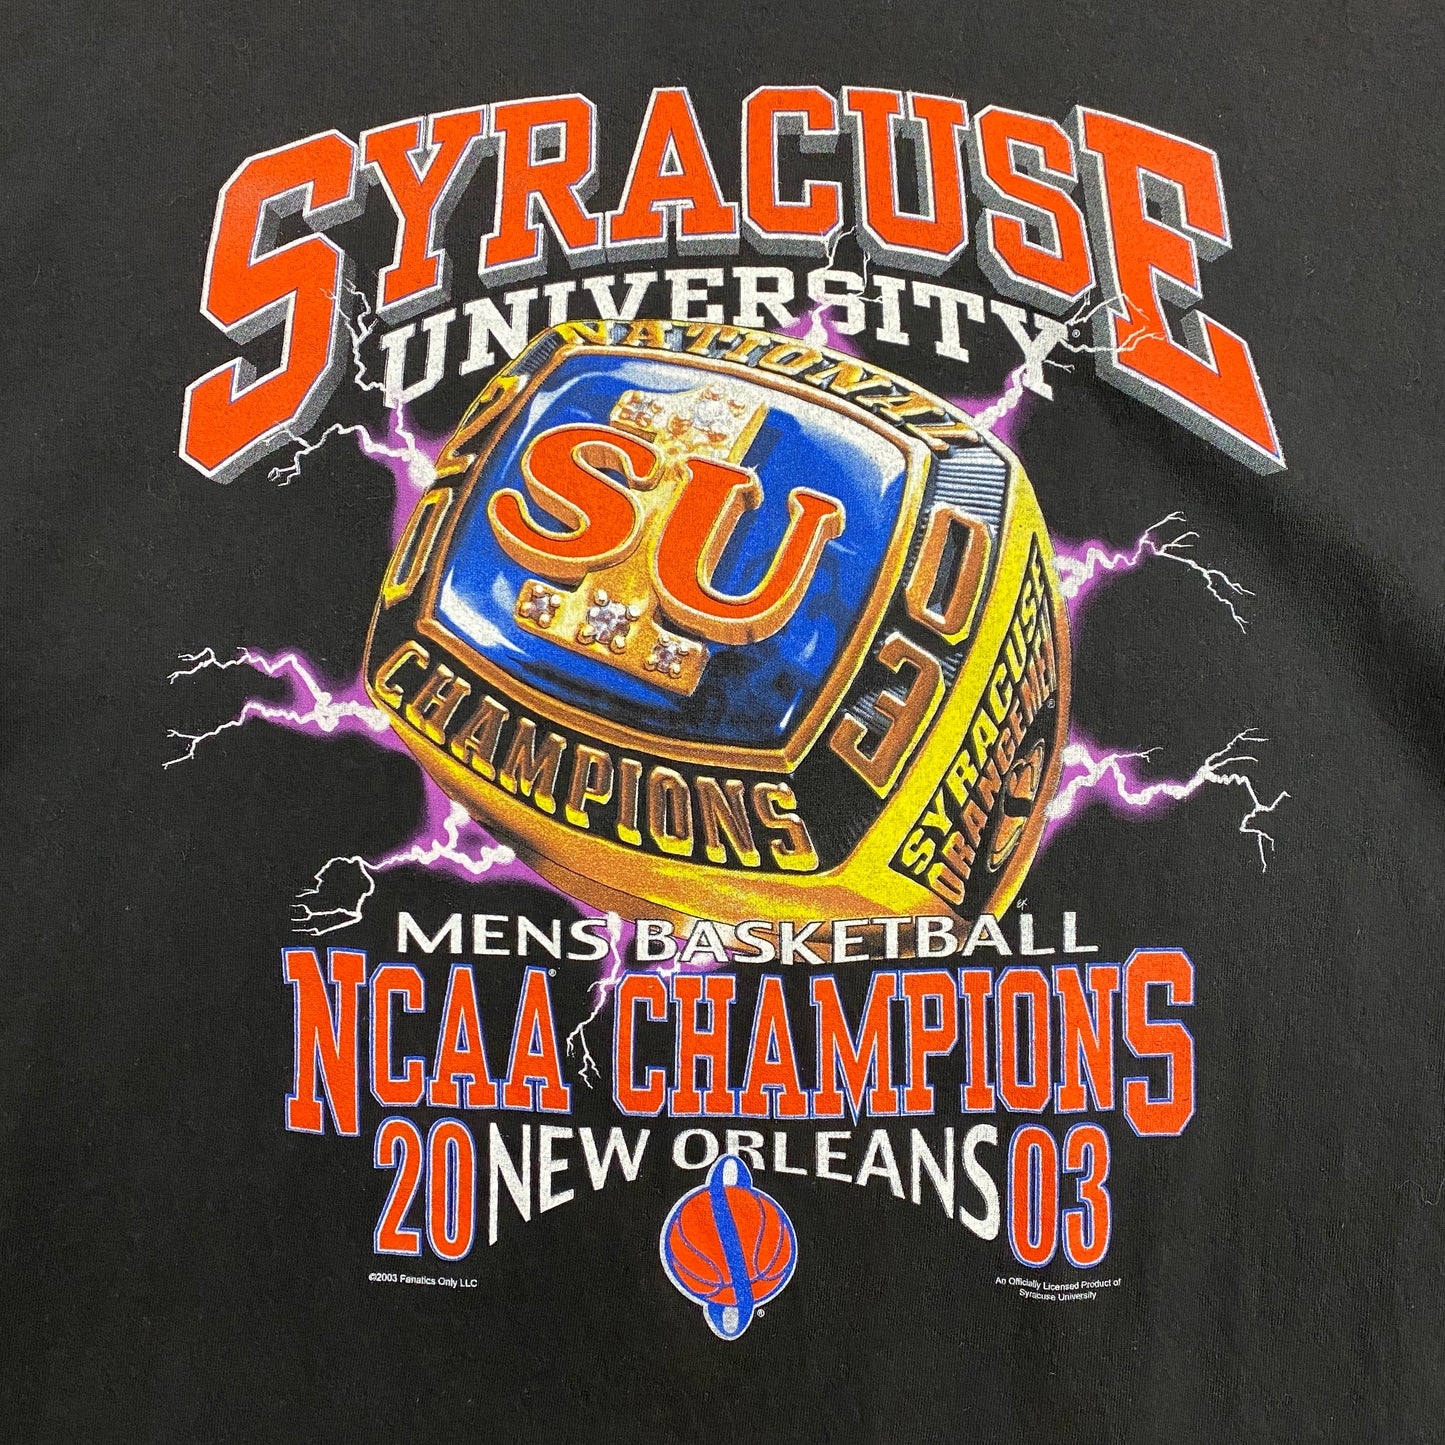 2003 Syracuse University National Champions "Ring" Tee - Size XL